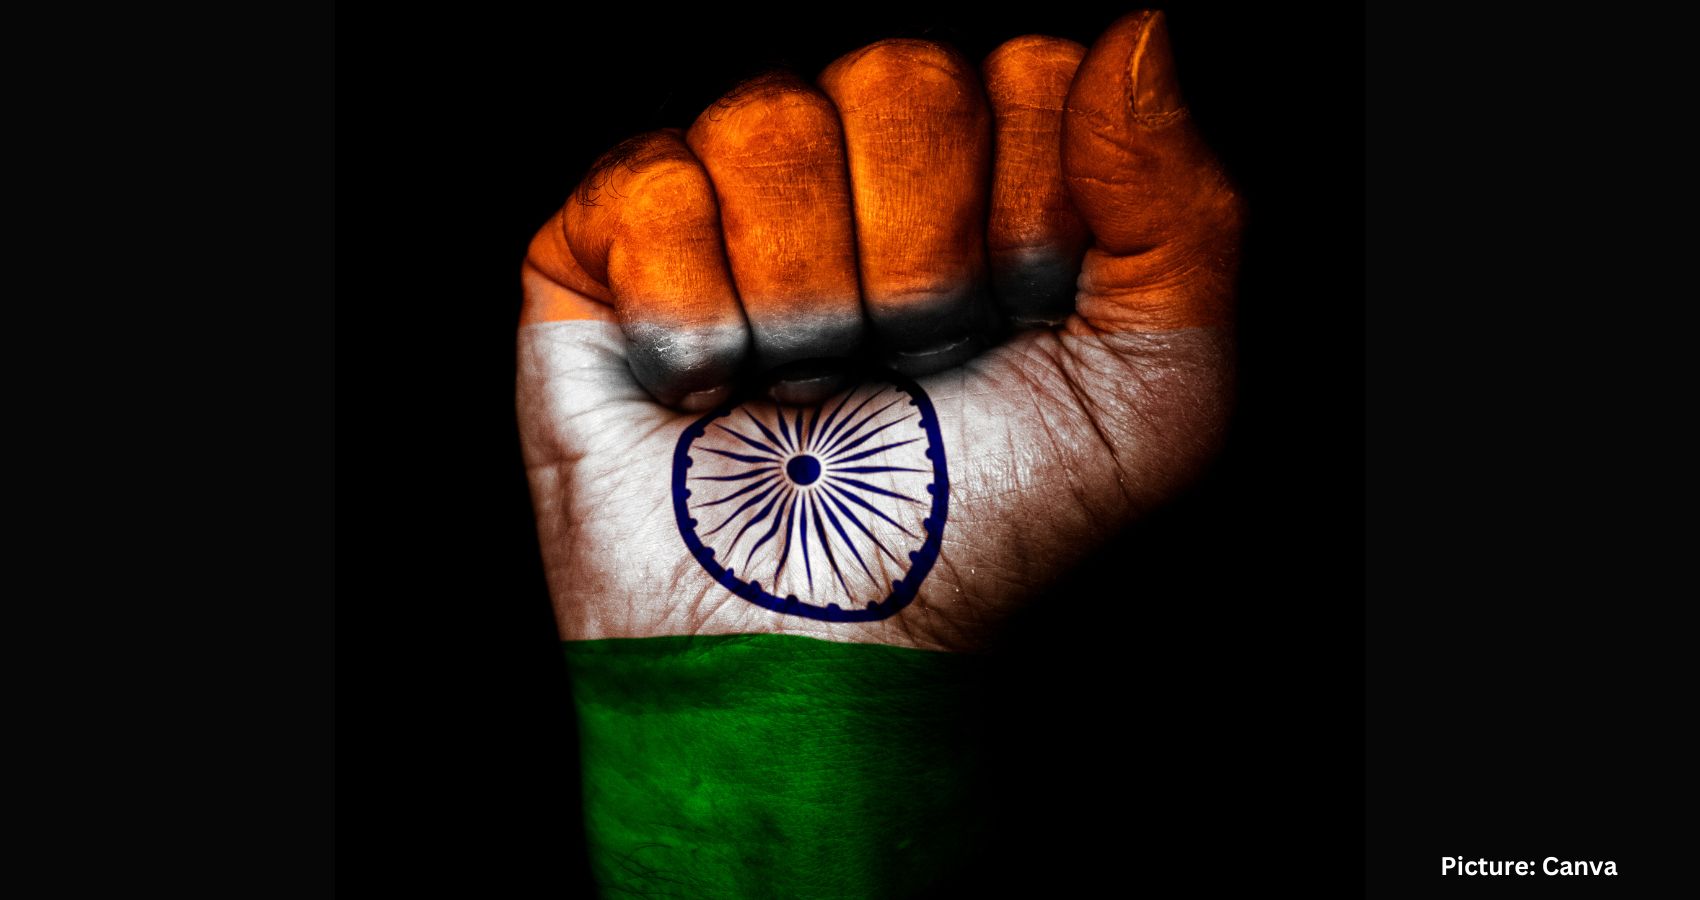 India’s Democratic Decline: Erosion of Institutions, Free Speech Suppression, and Rising Authoritarianism